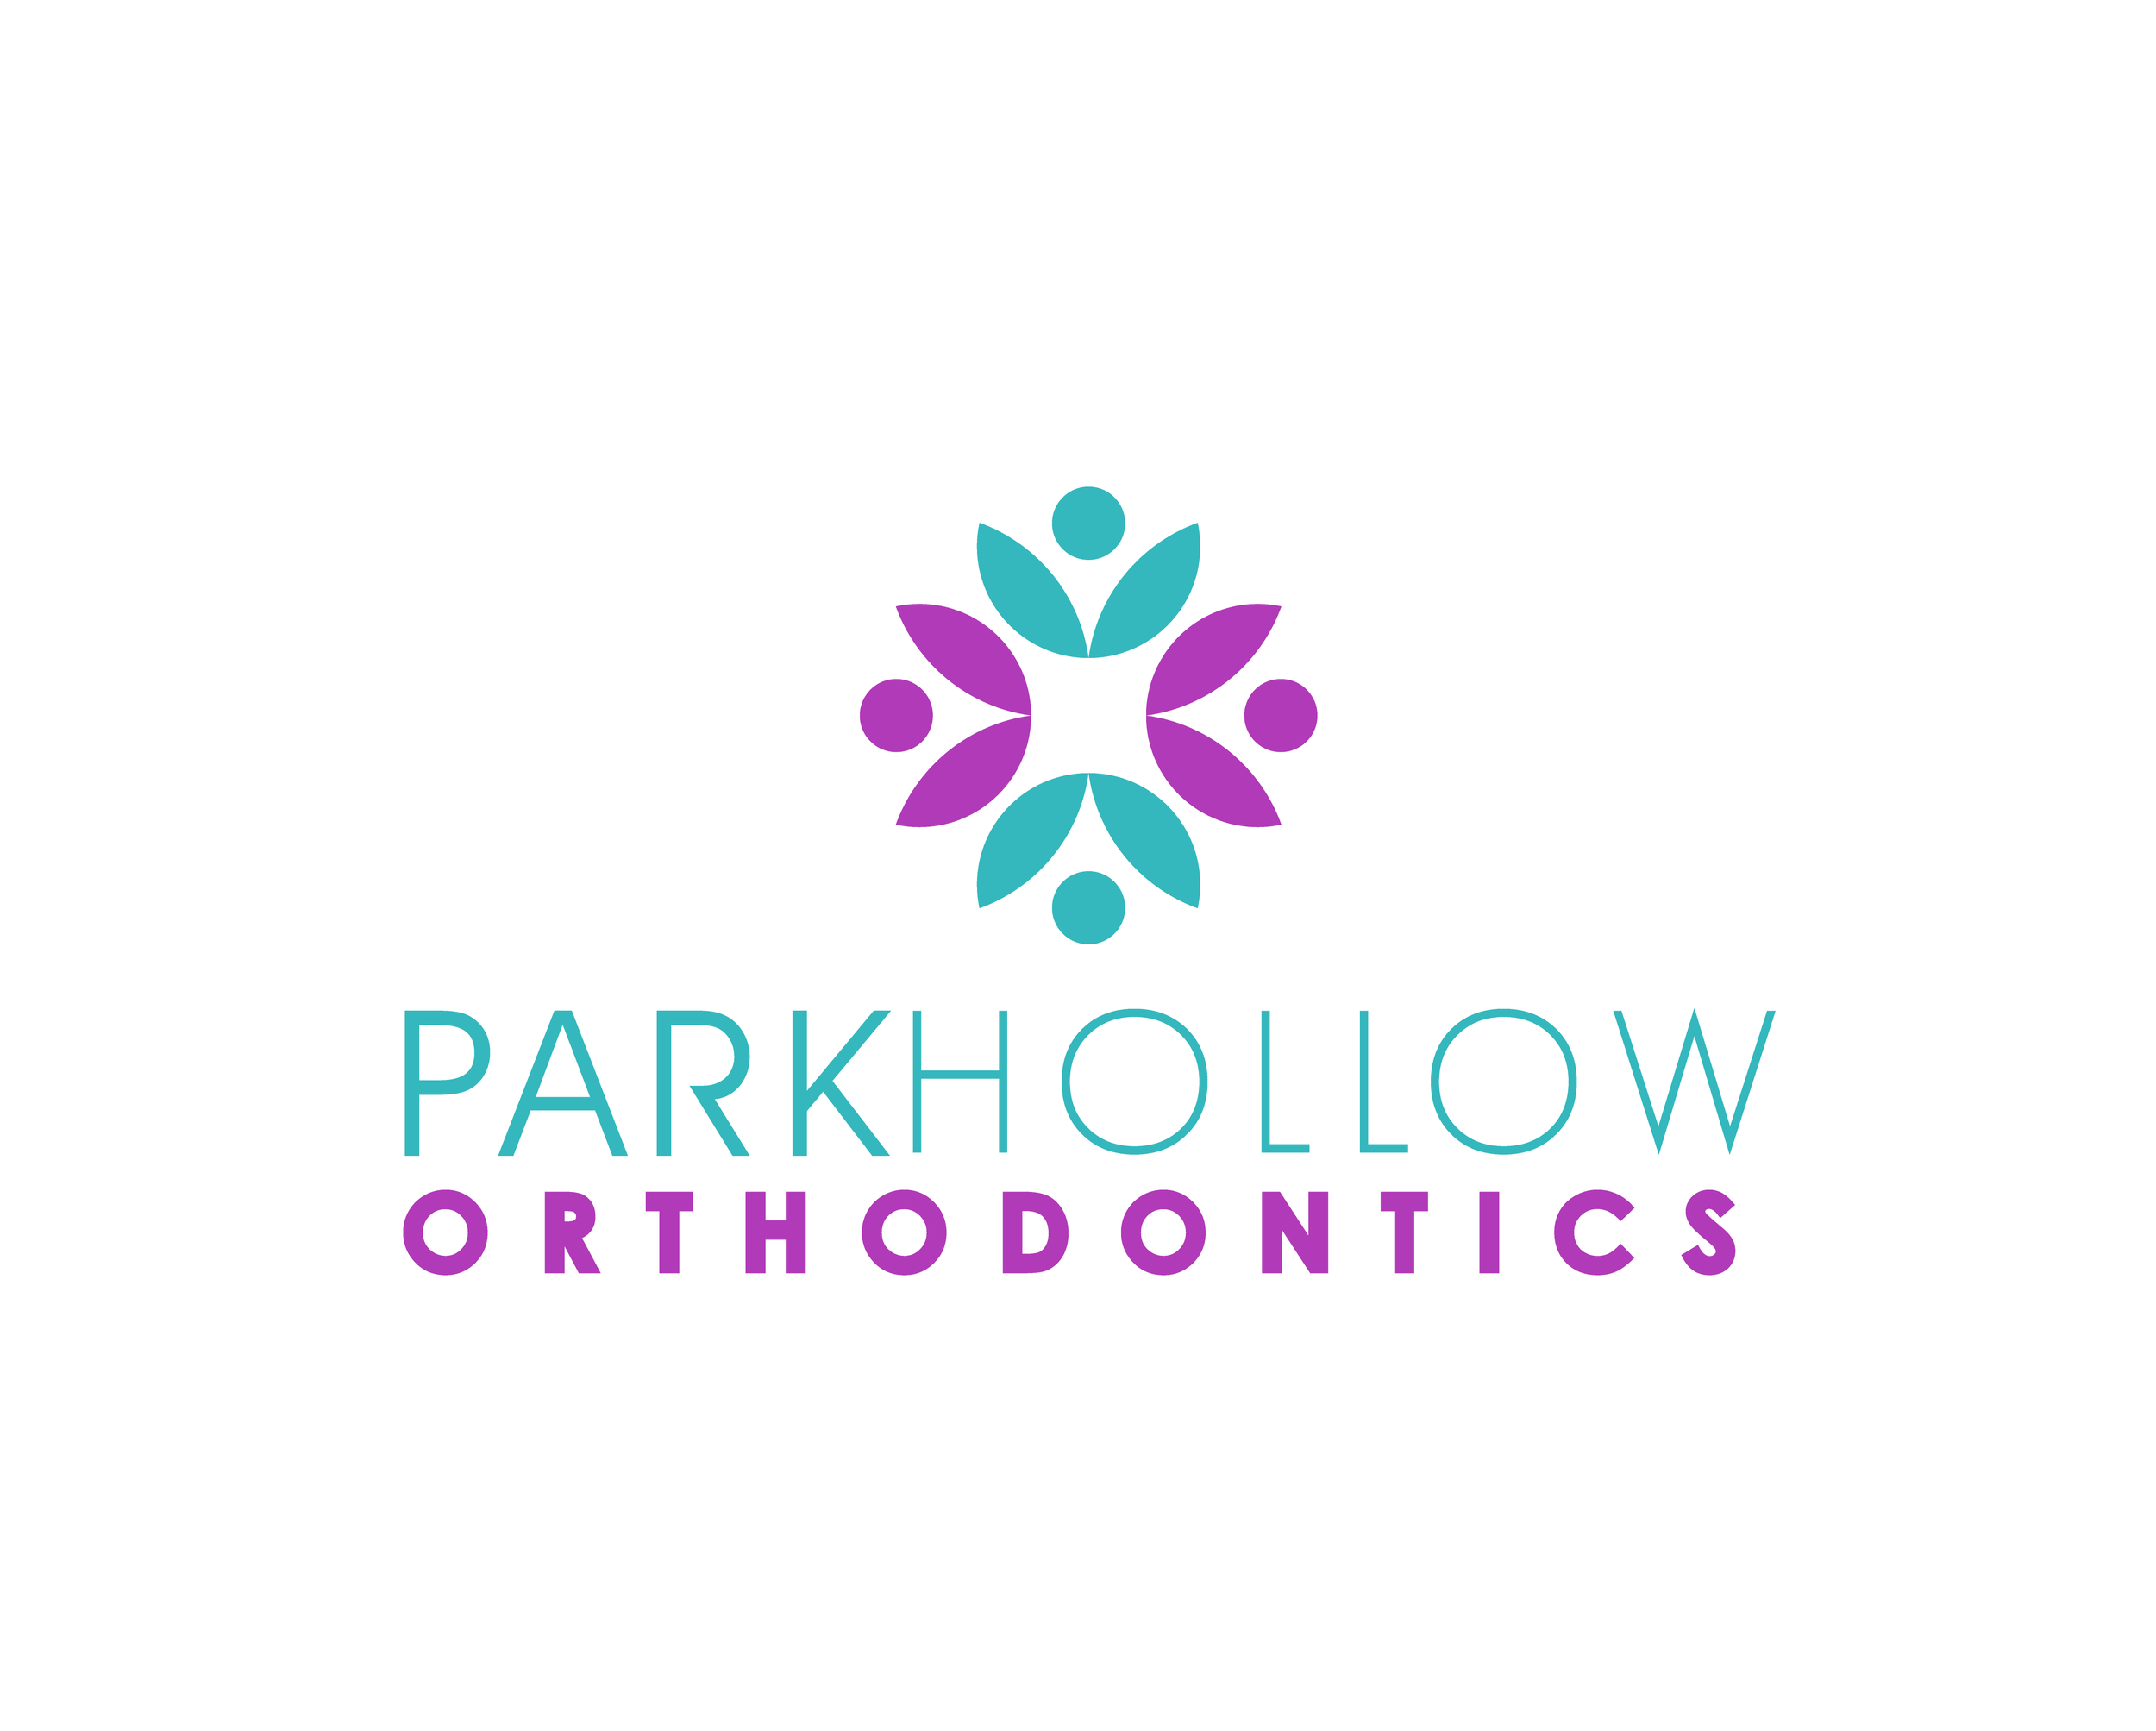 Park Hollow Orthodontics